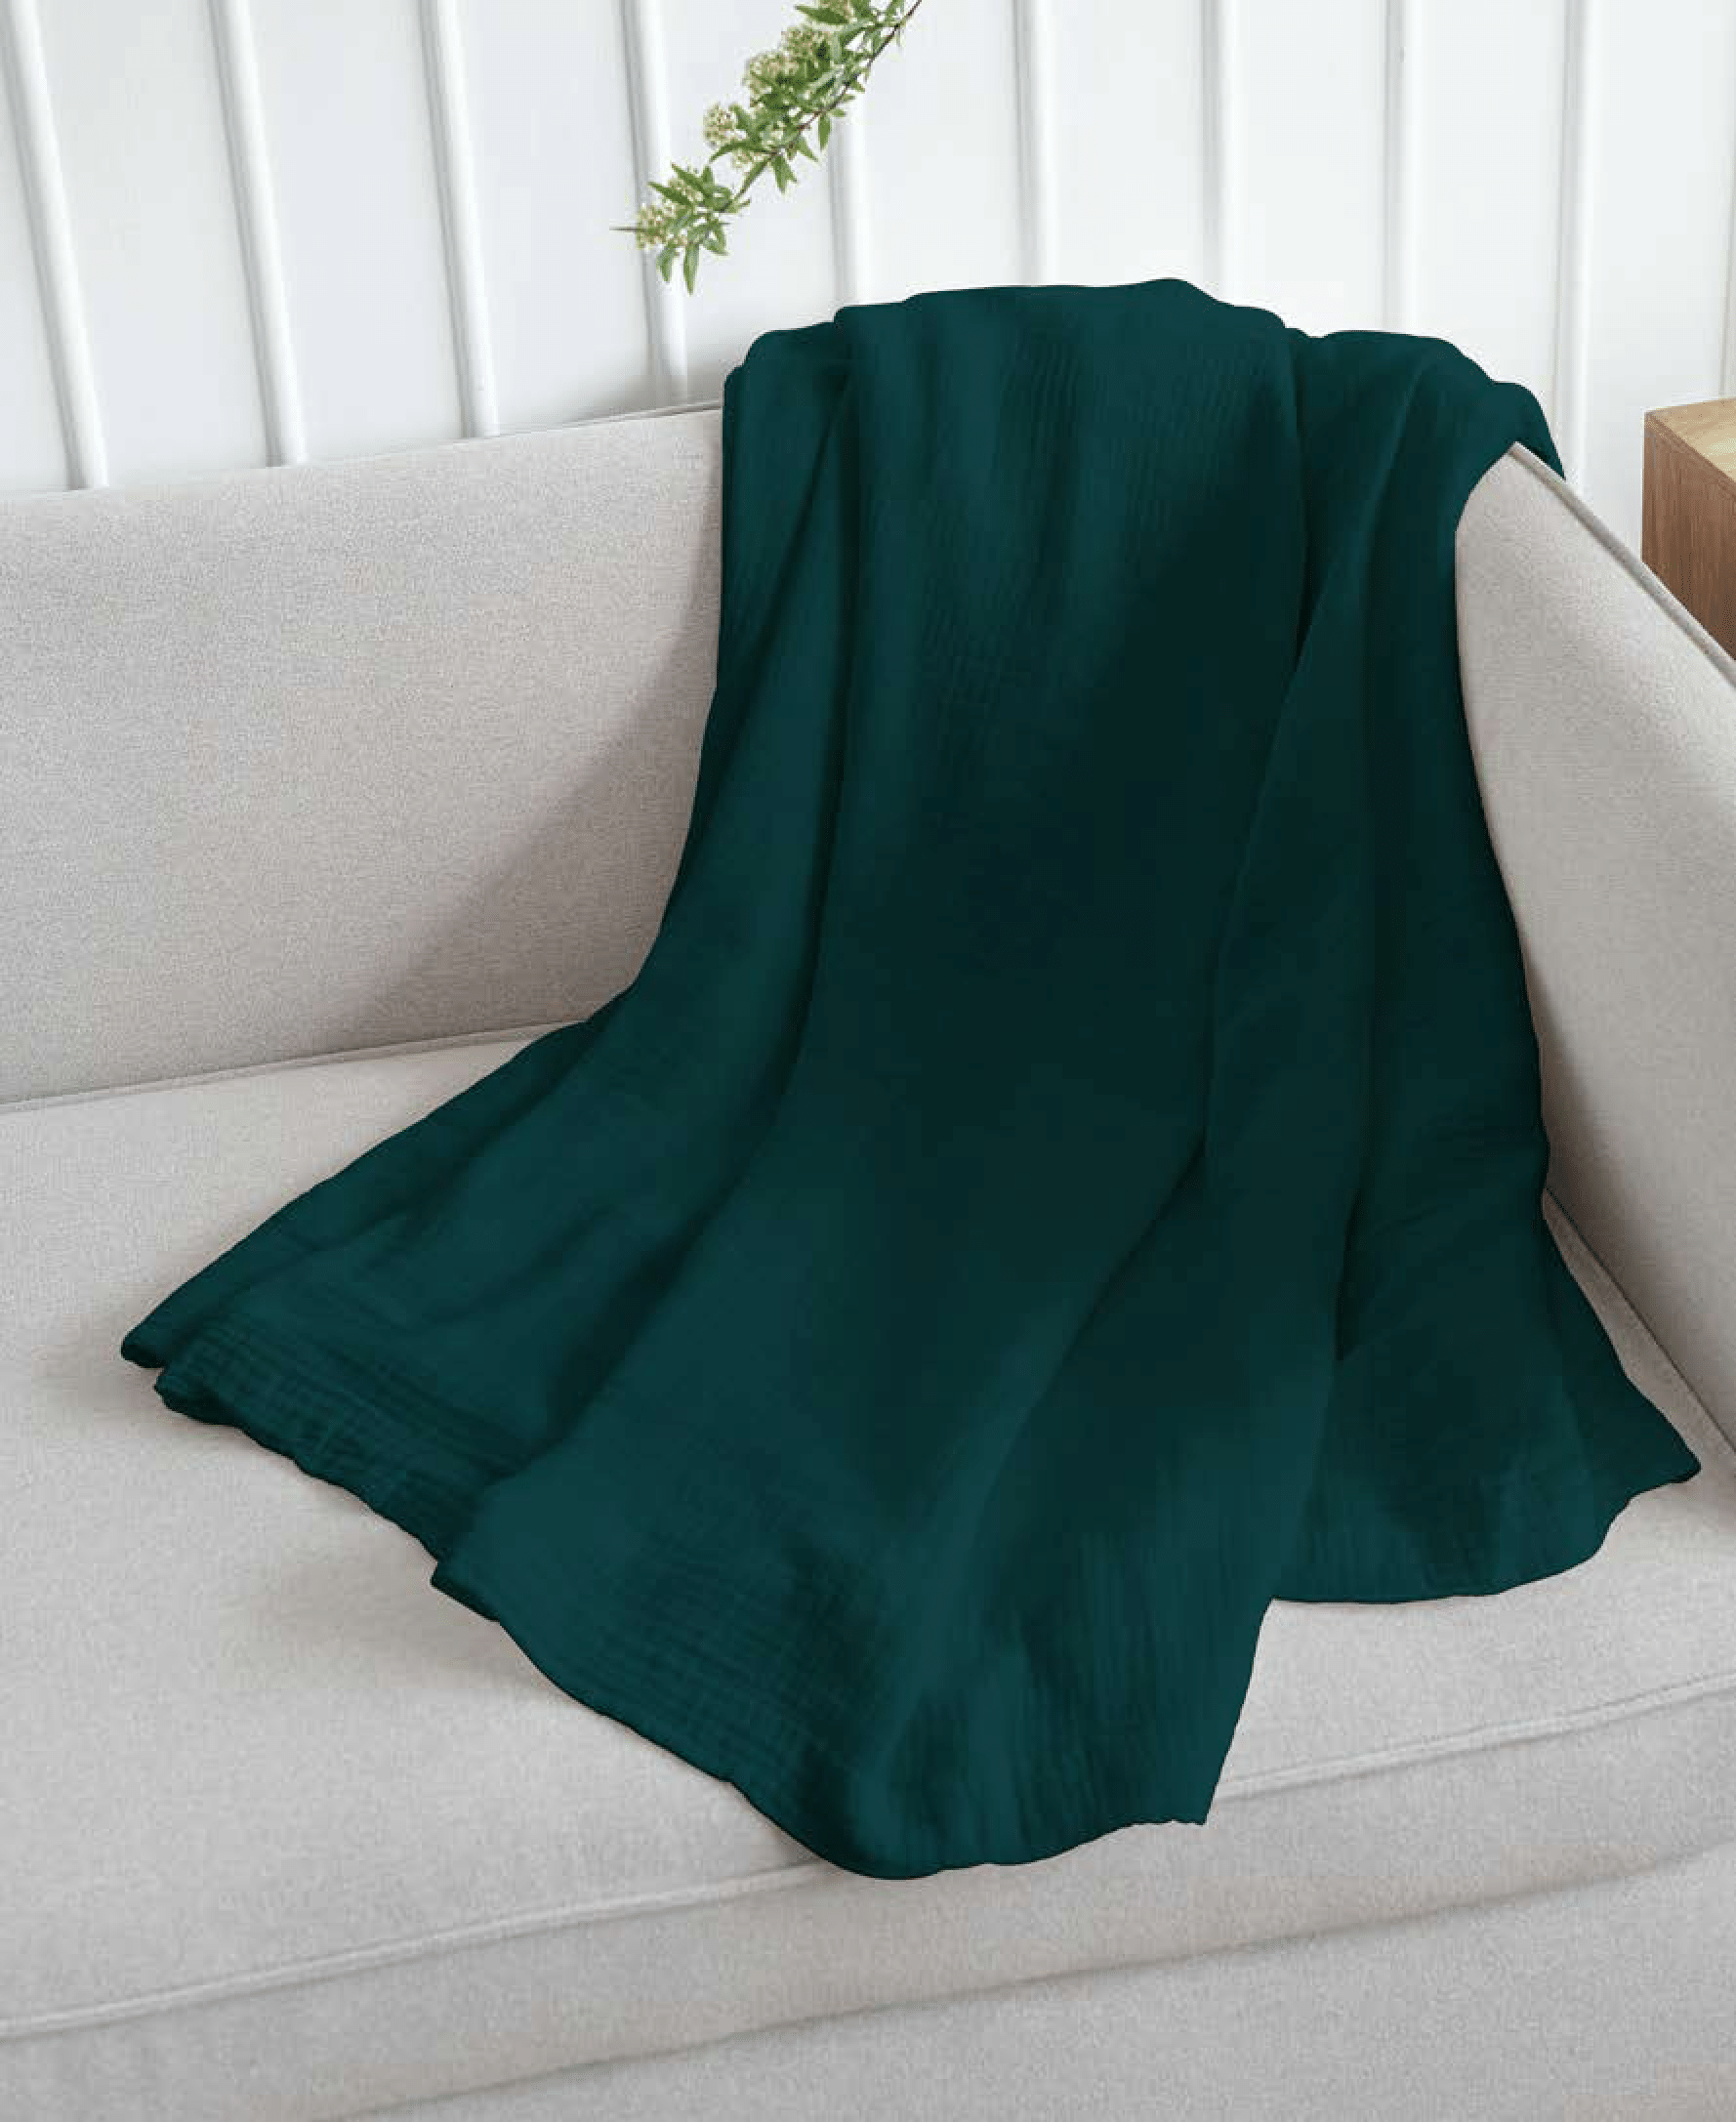 Teal Blanket